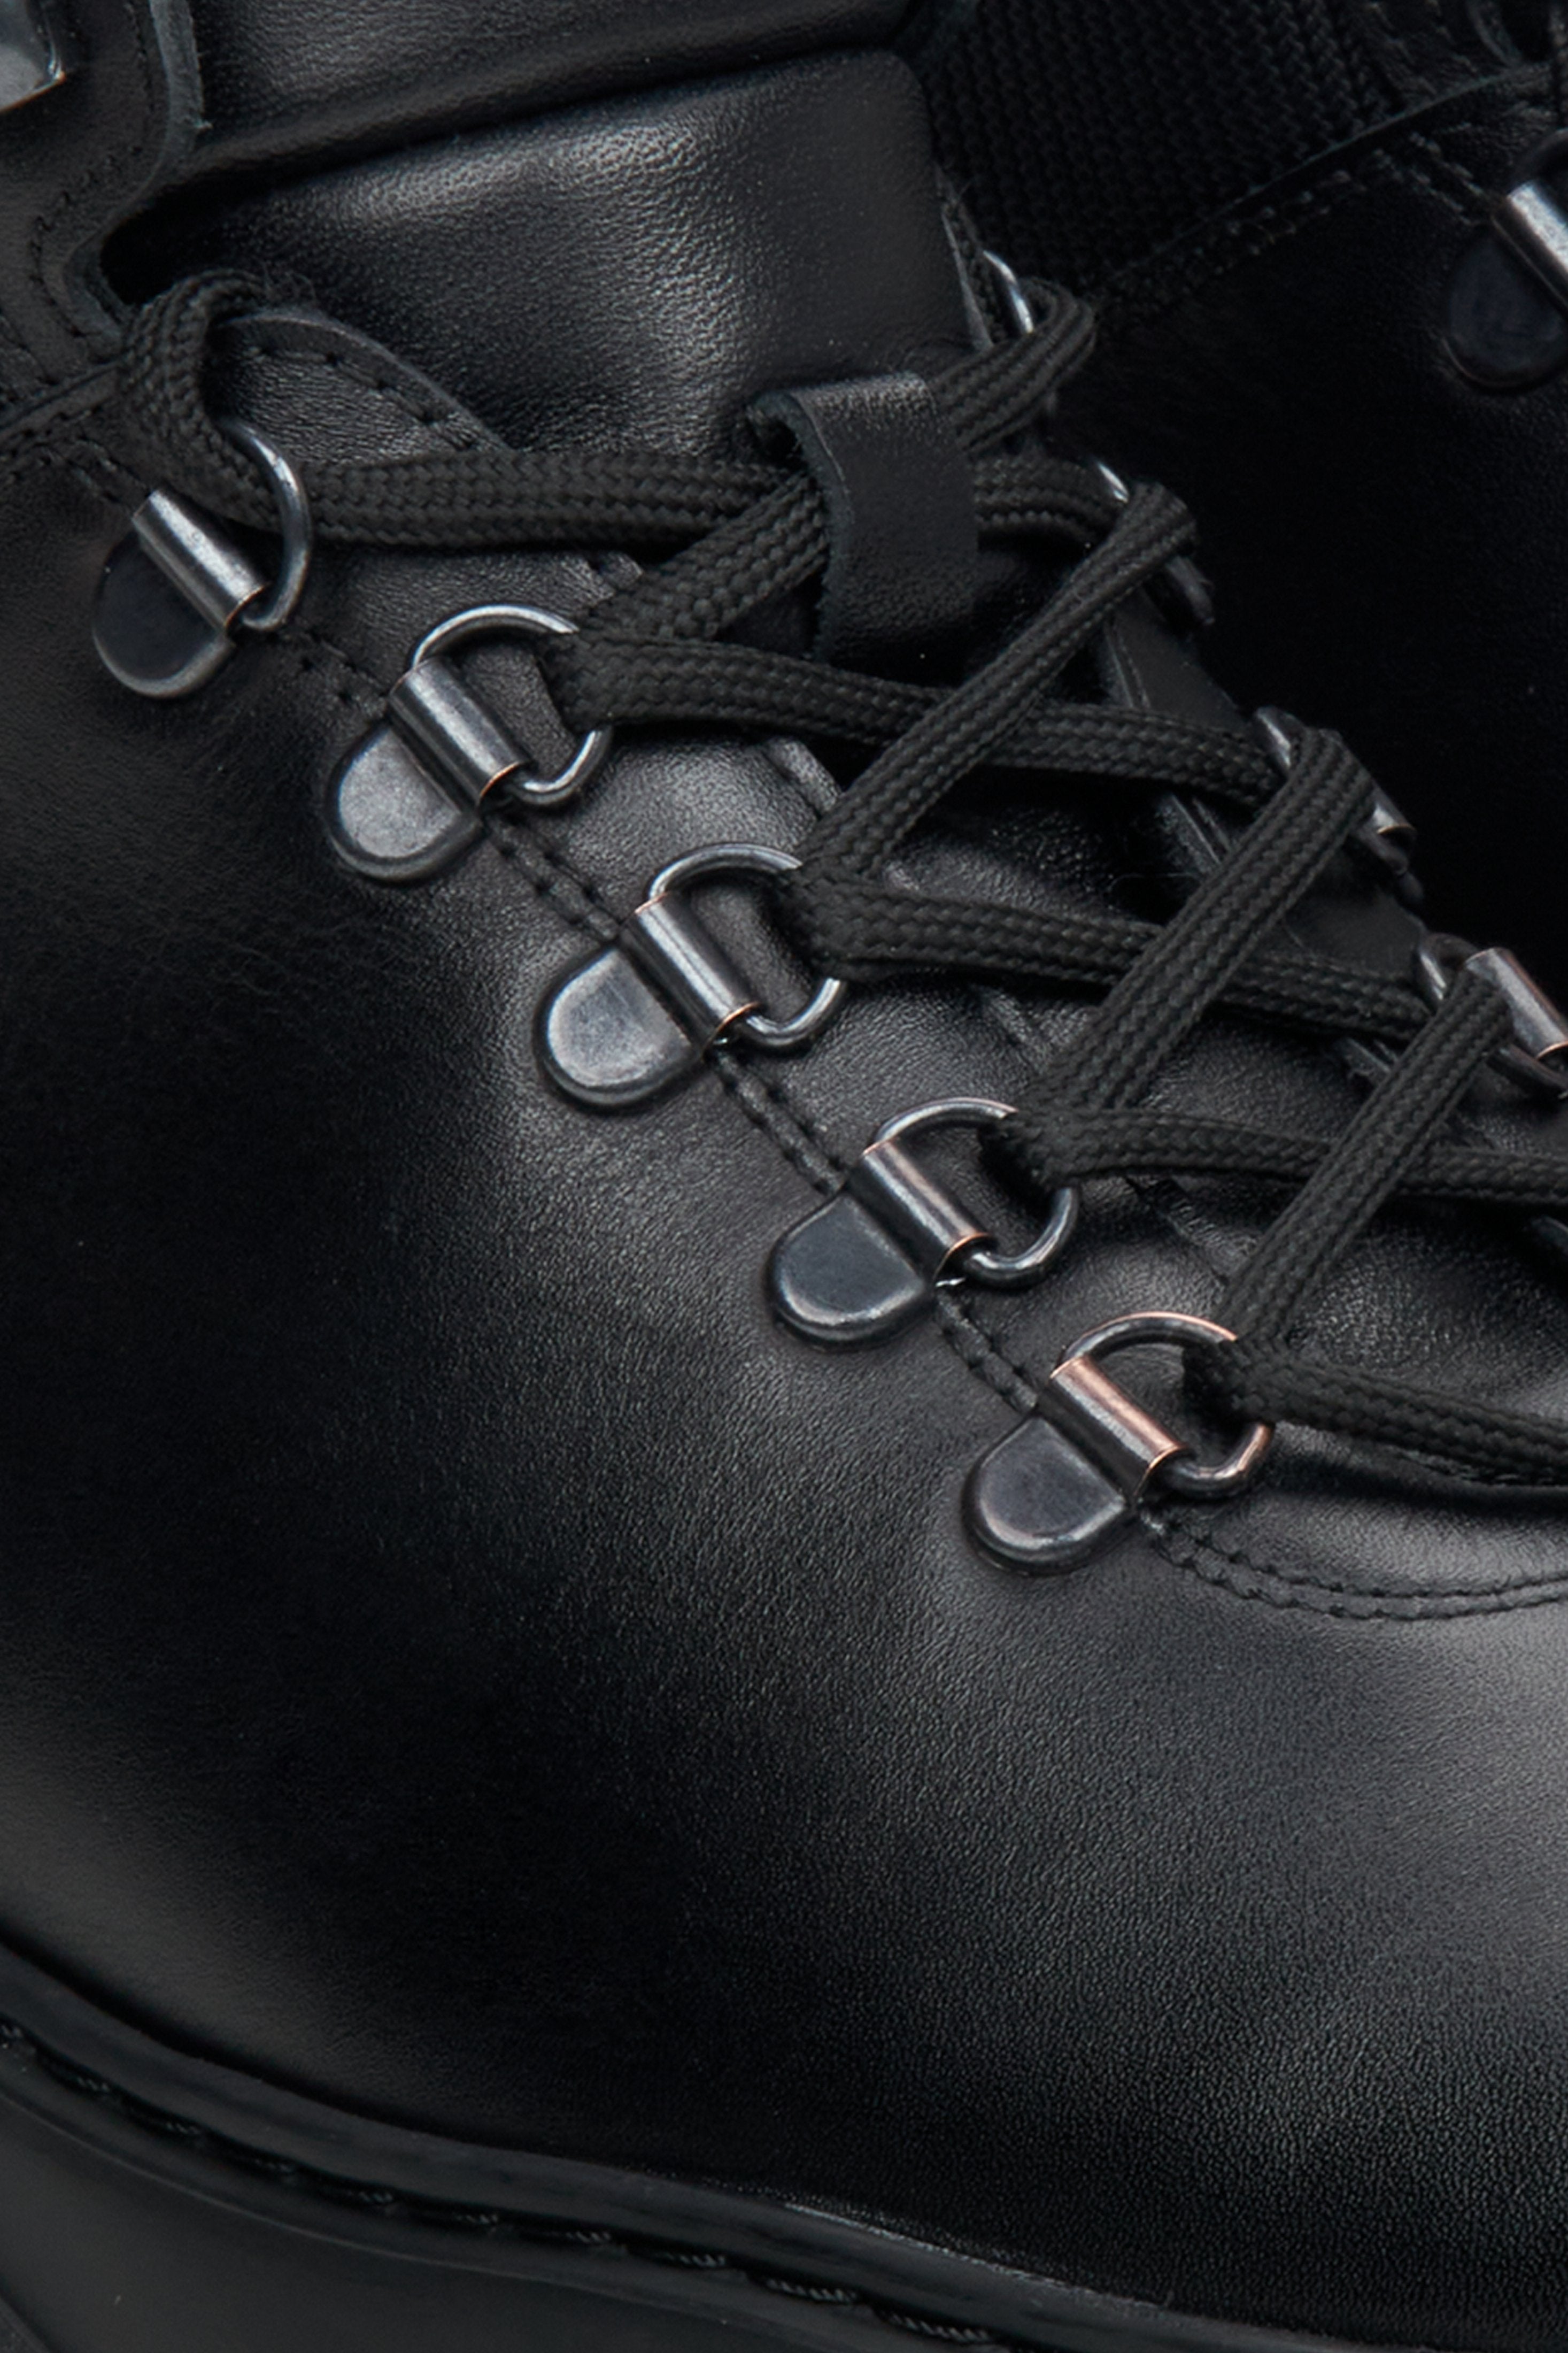 Men's black leather Estro boots - close-up on the details.